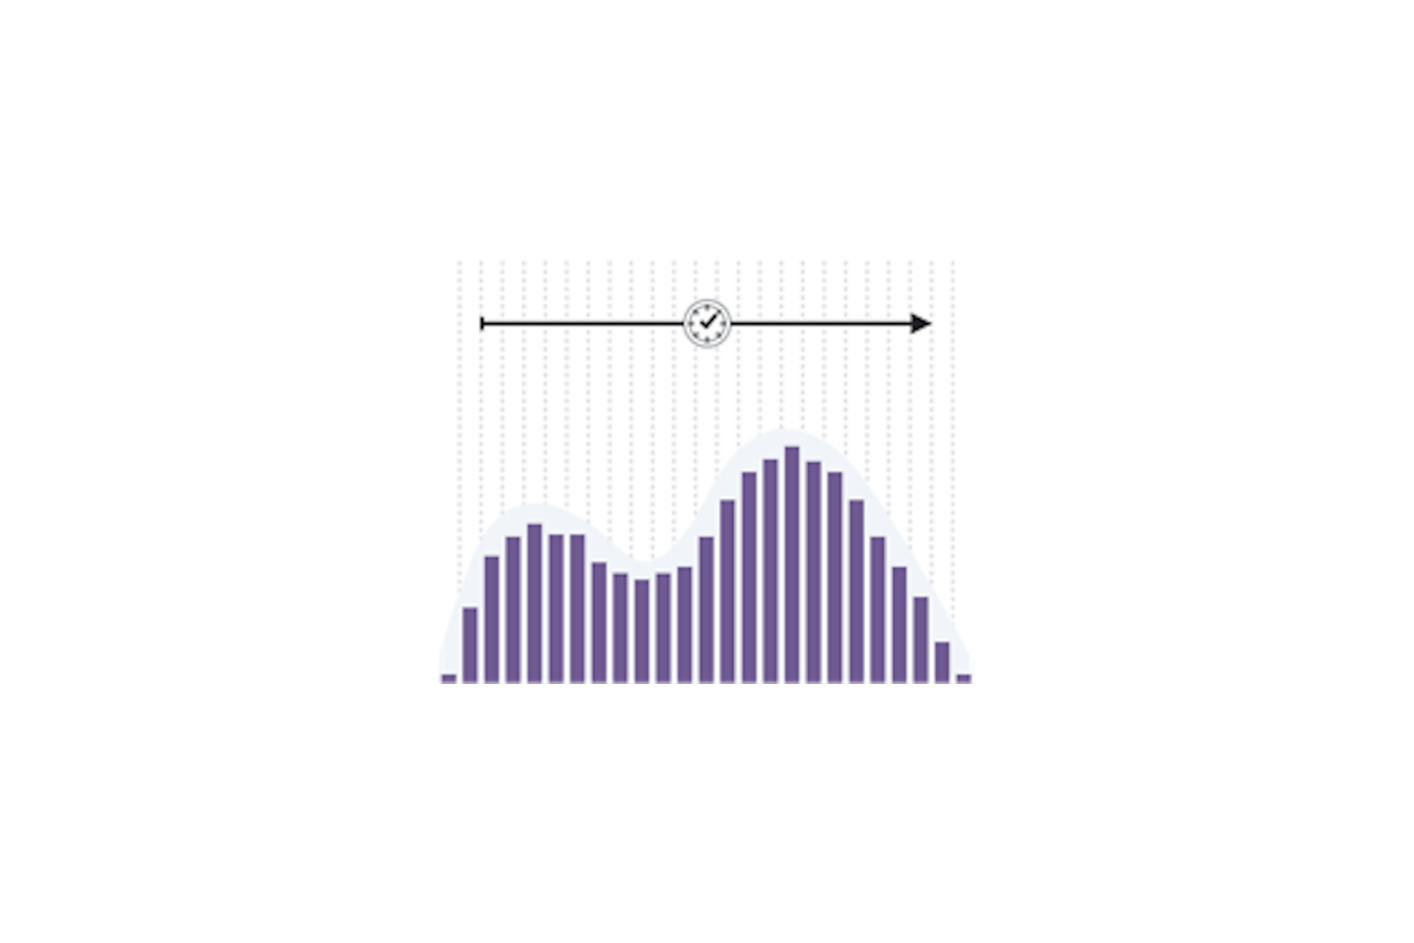 A graph of High-Resolution Audio at 24bit/96kHz